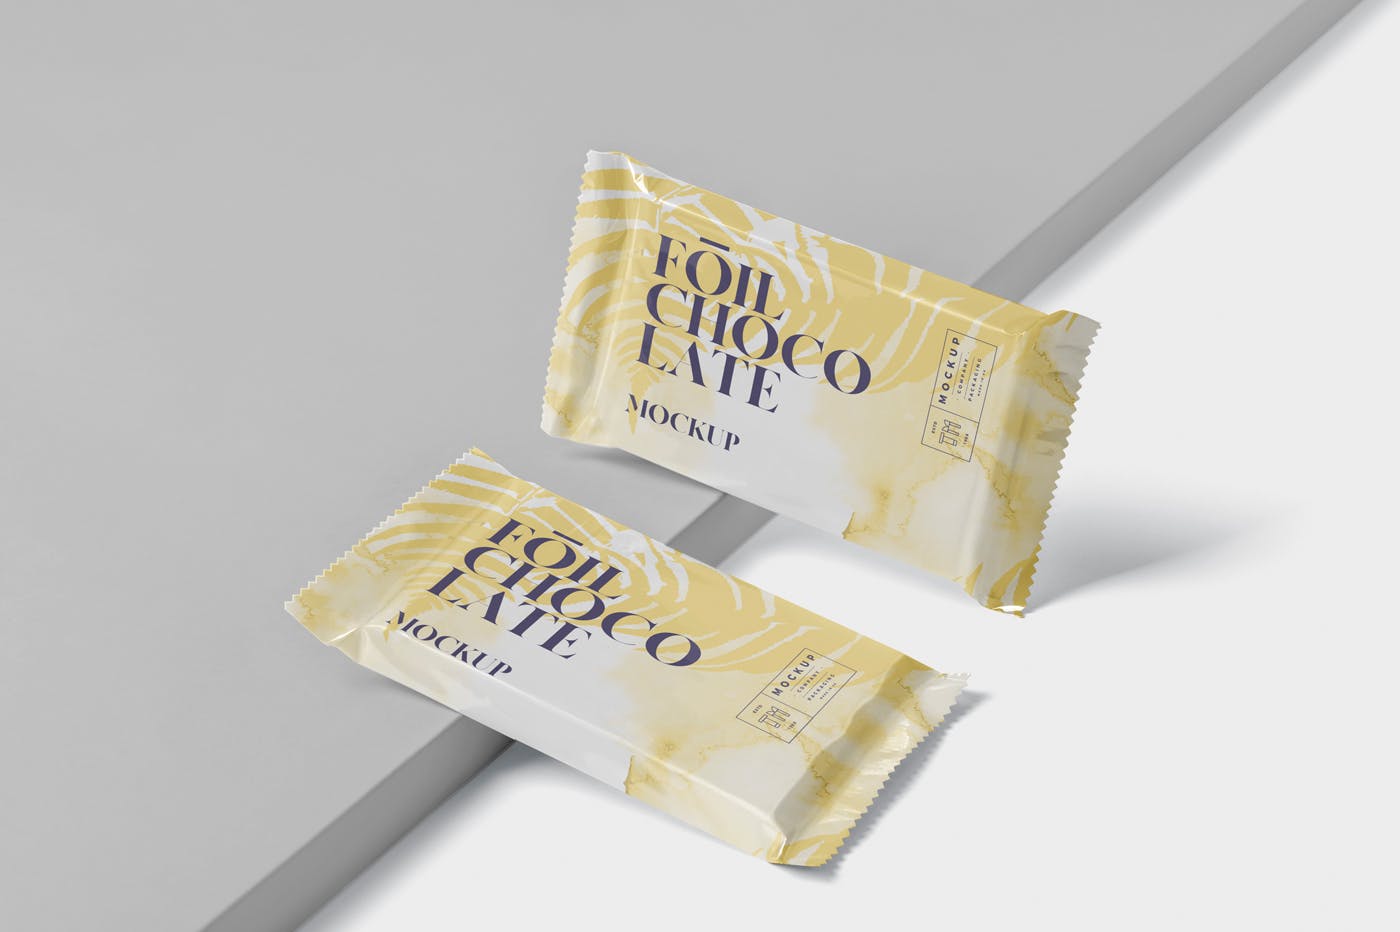 巧克力超薄铝箔纸包装设计效果图素材中国精选 Foil Chocolate Packaging Mockup – Slim Size插图(3)